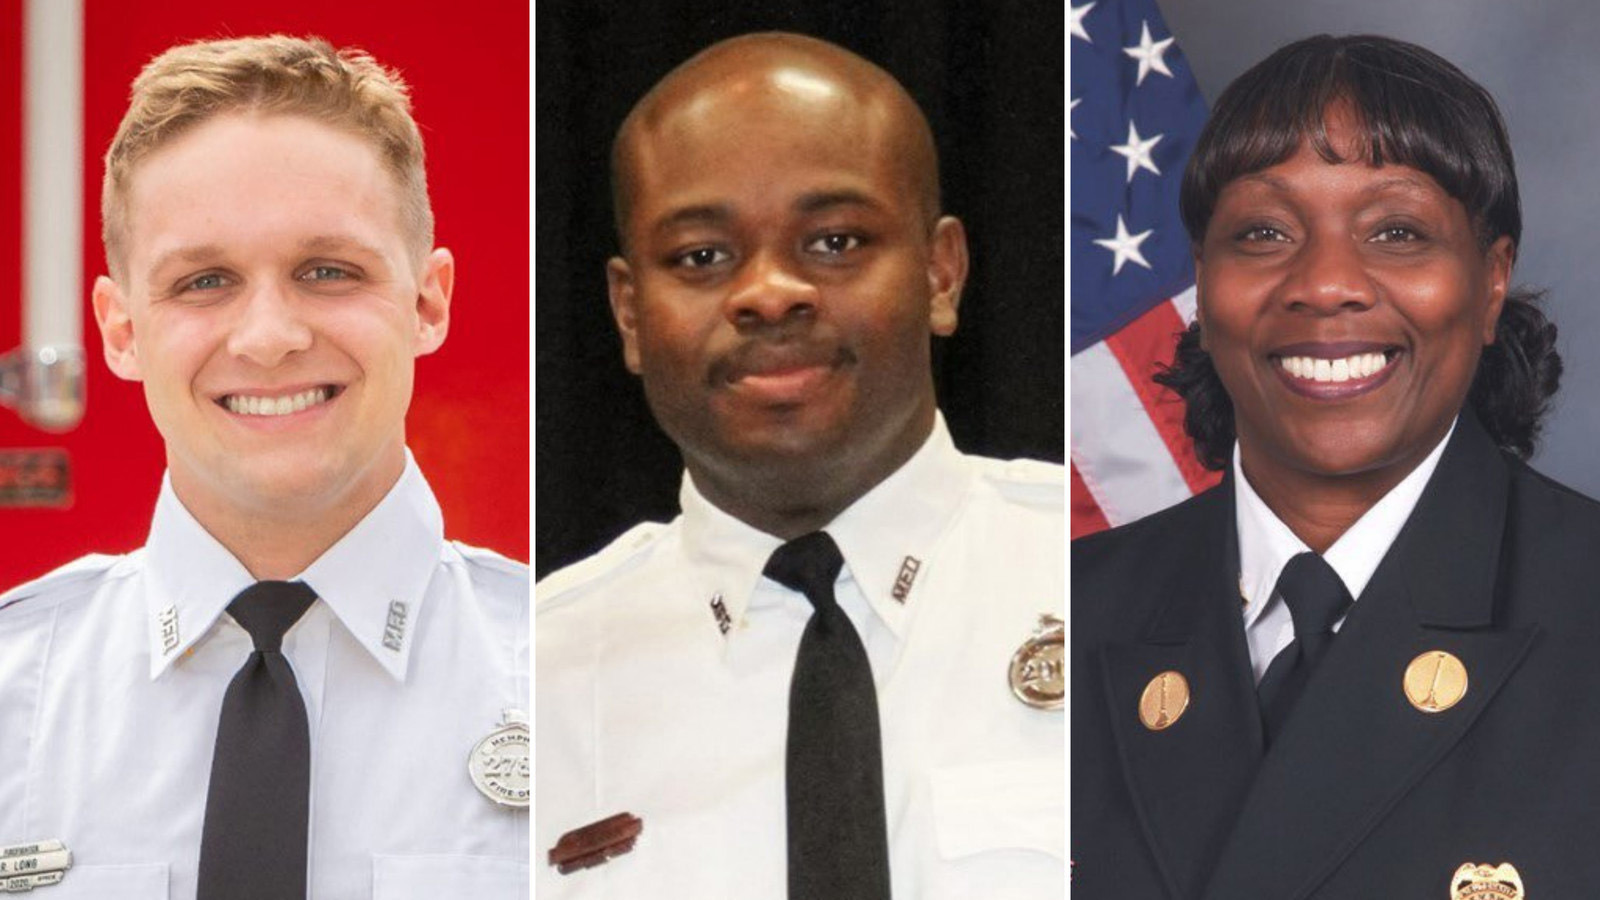 EMT-Basic Robert Long, left, EMT-Advanced JaMichael Sandridge, and Lt. Michelle Whitaker were fired from the Memphis Fire Department, the department said.